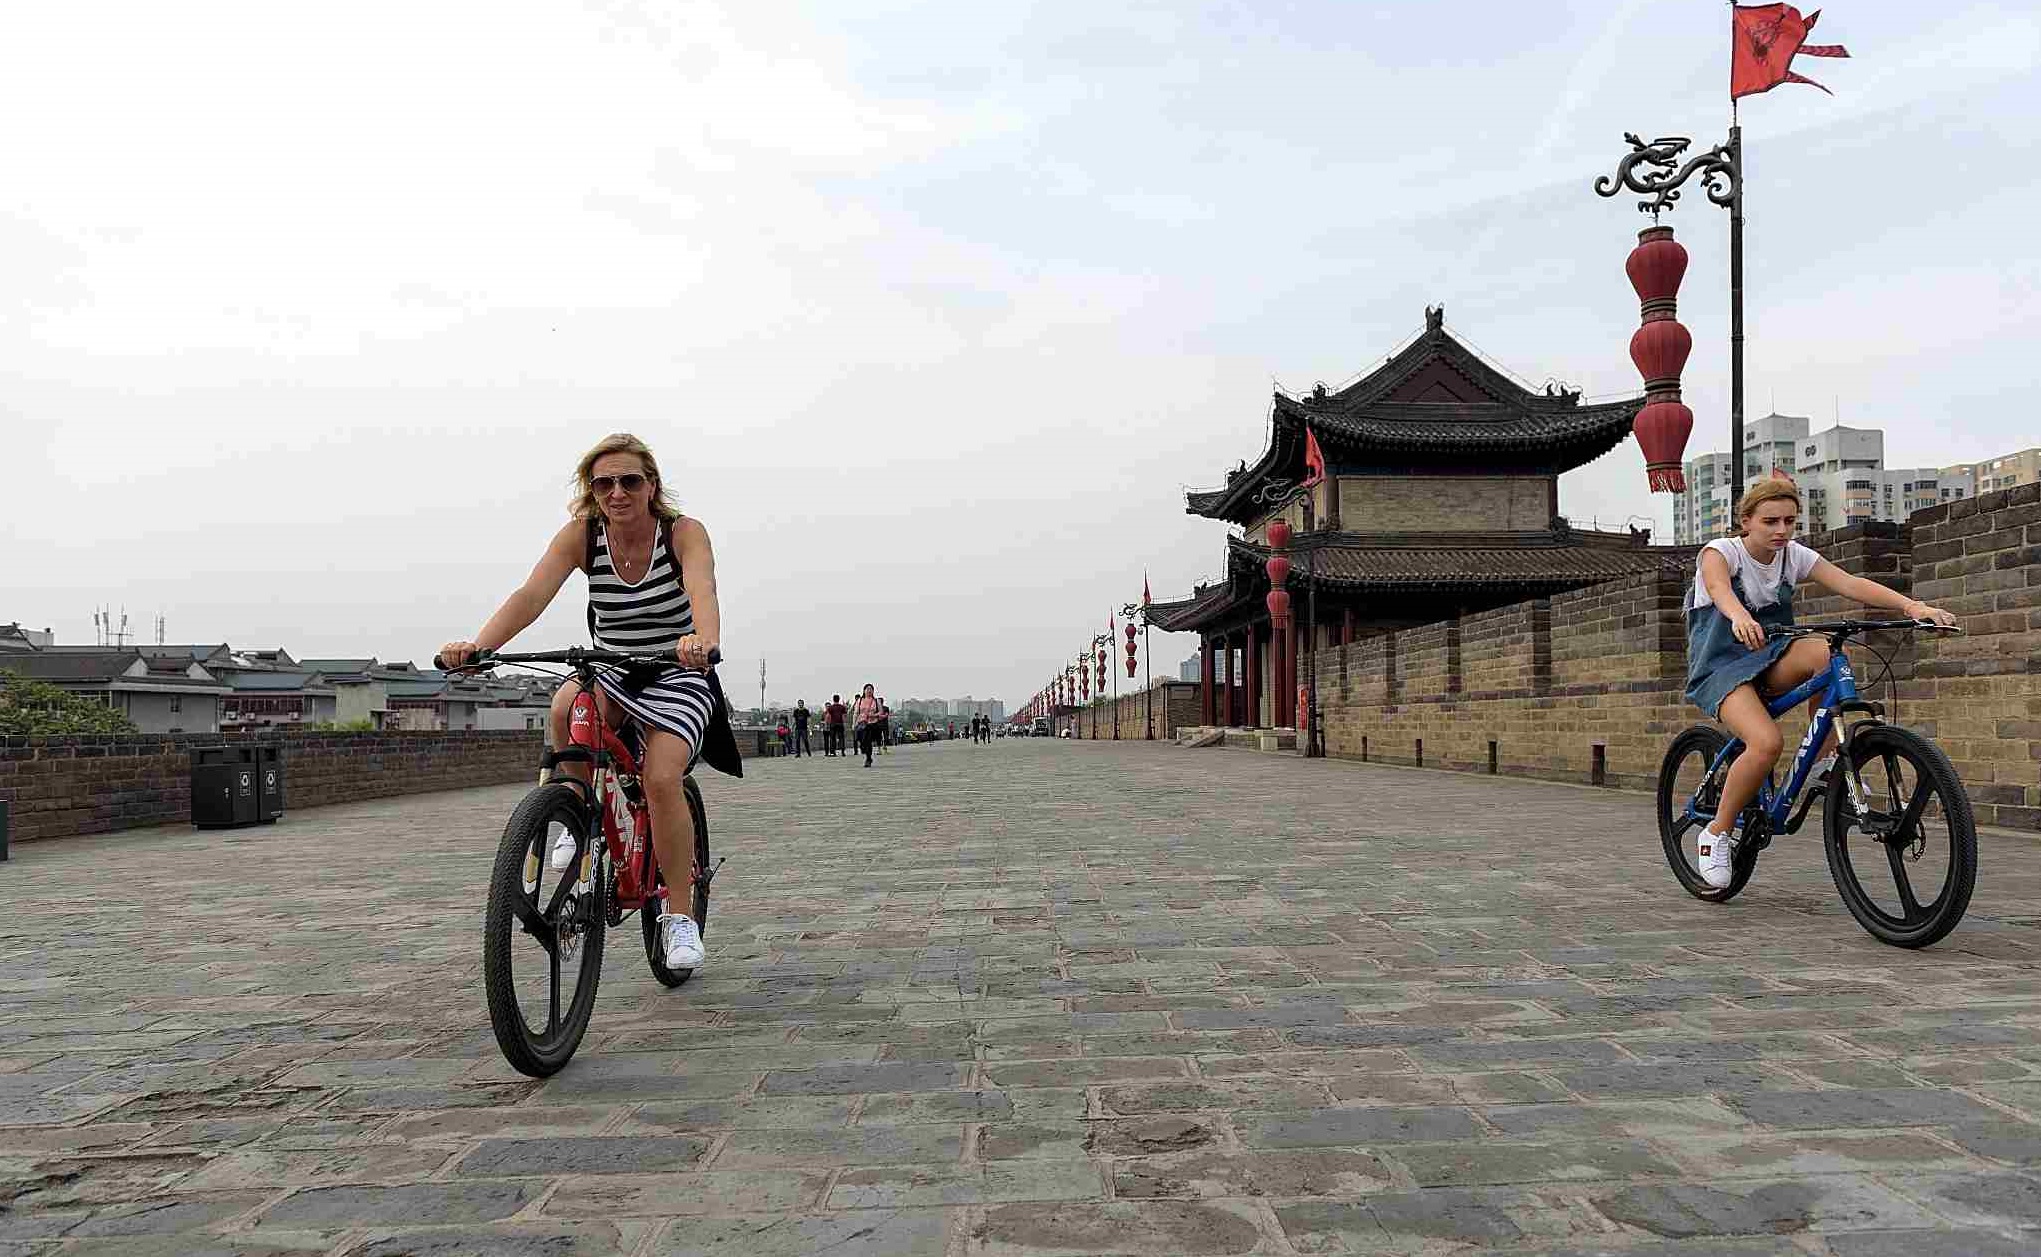 biking_on_xian_ancient_city_wall.jpg